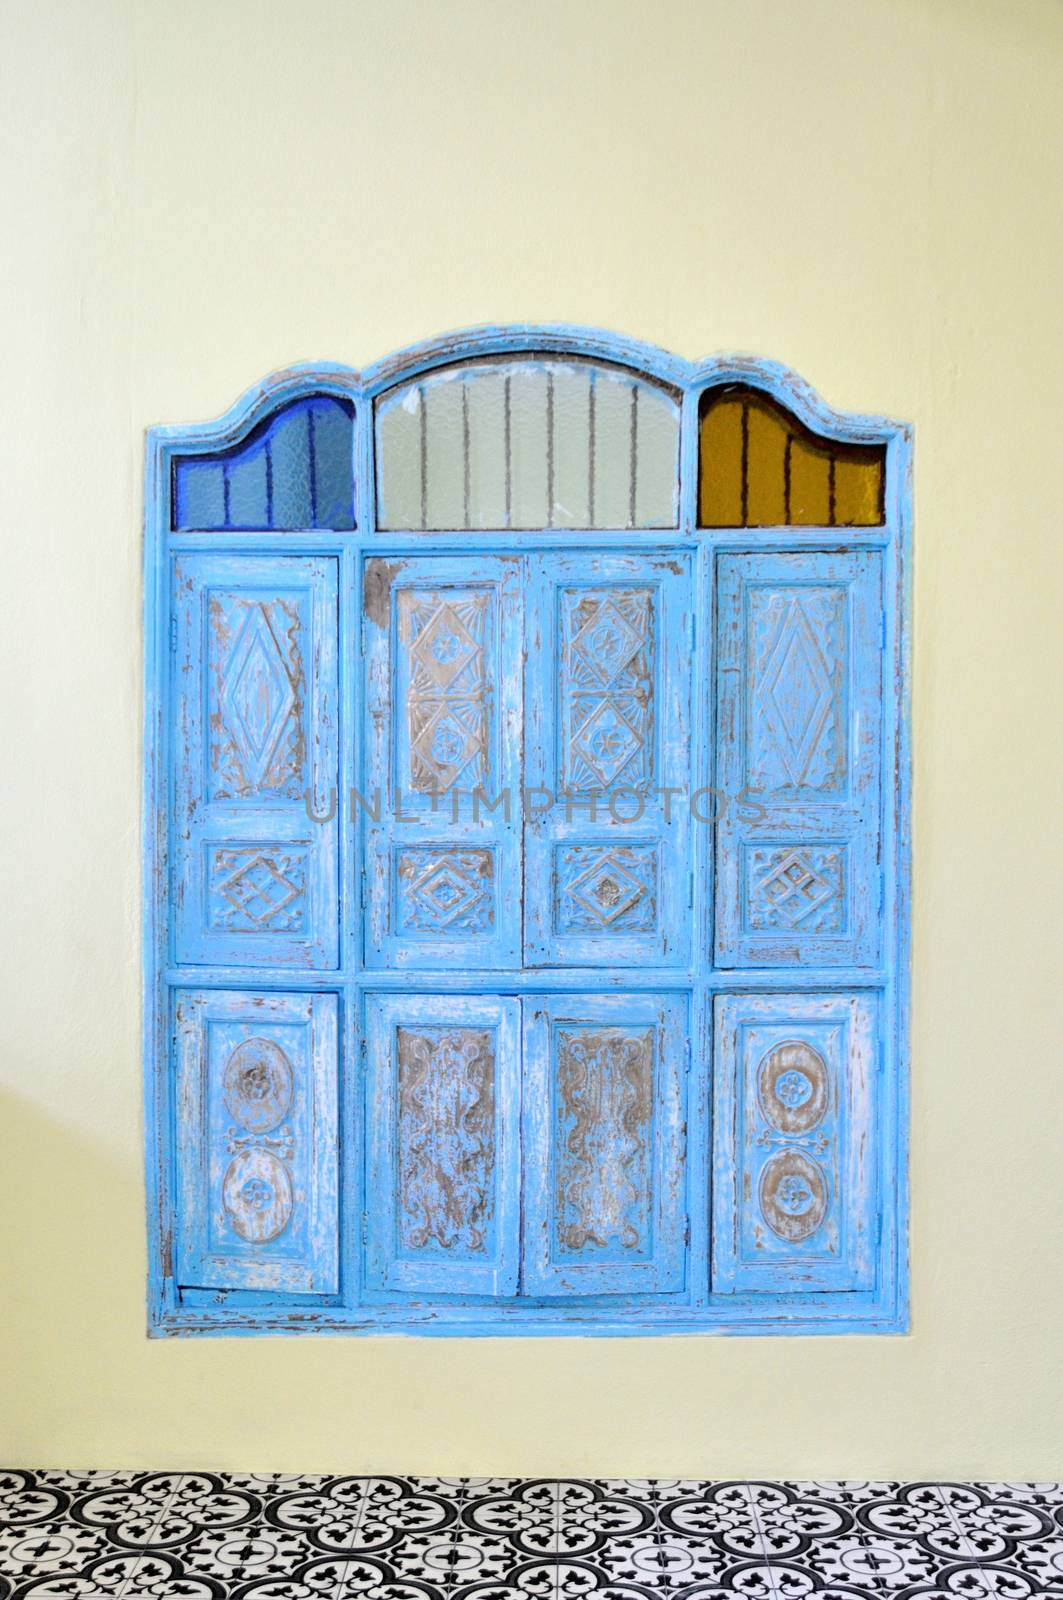 Morroco blue window